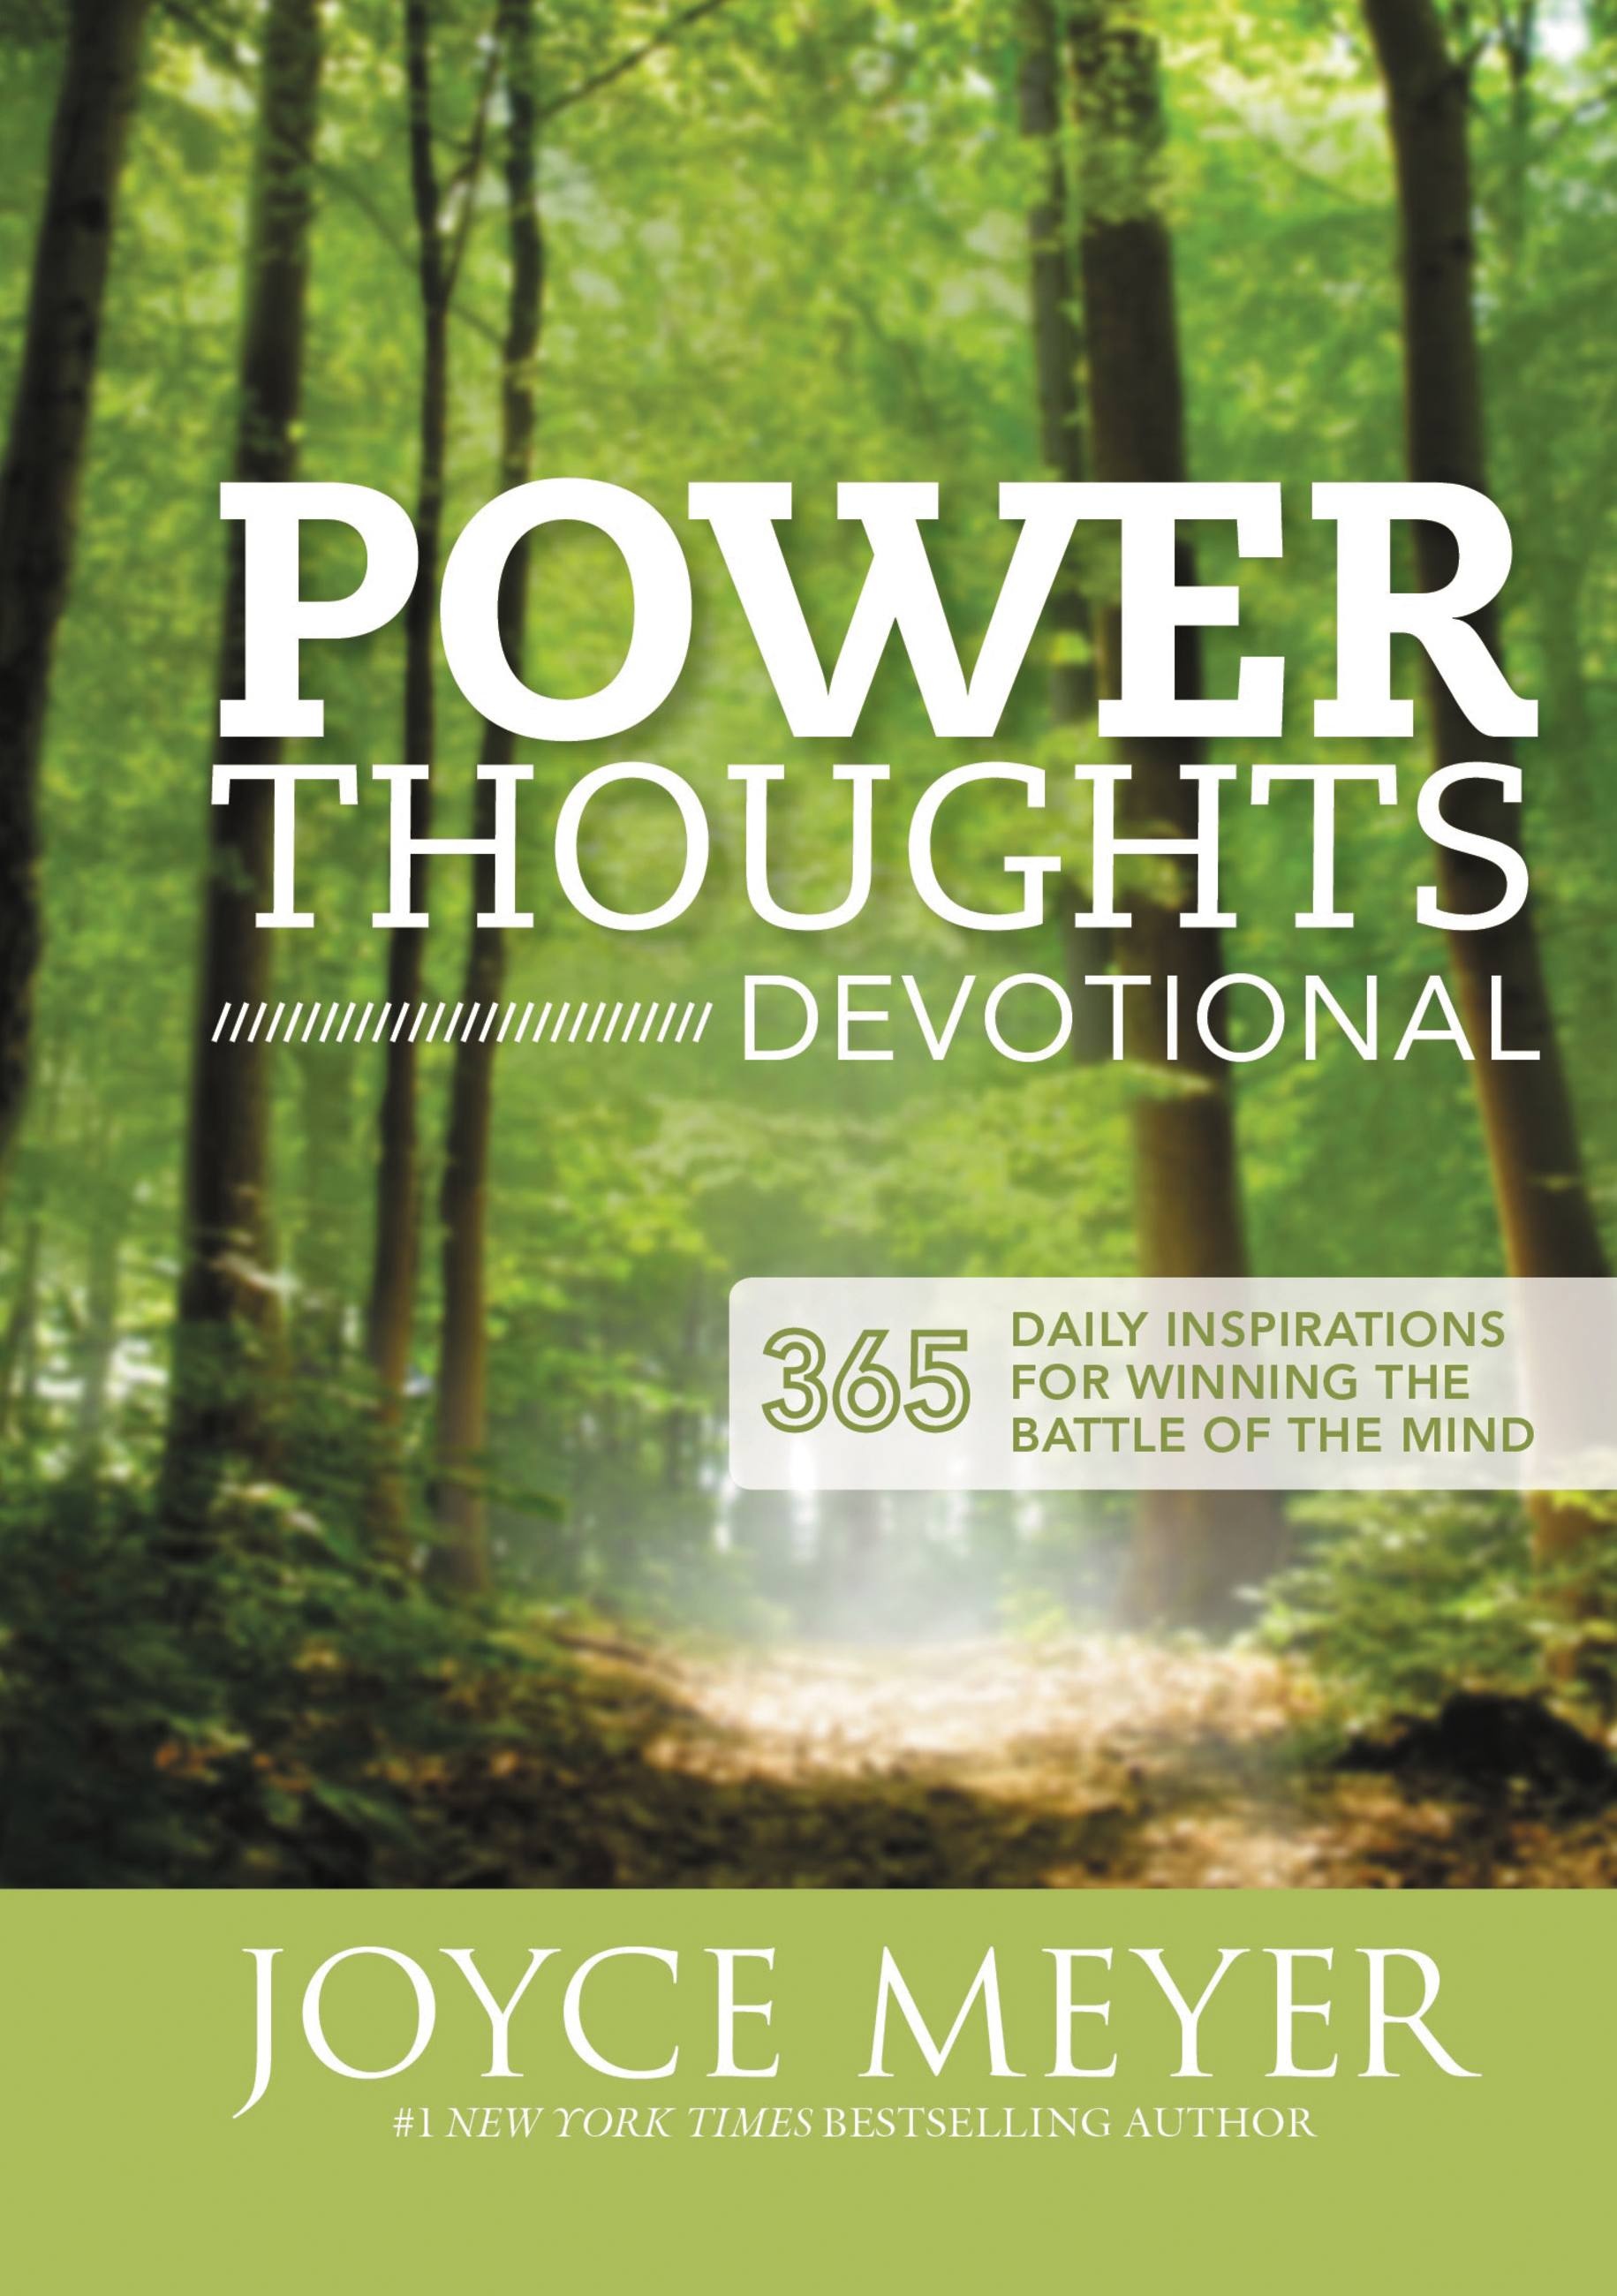 DOWNLOAD PDF: Power Thoughts Devotional by Joyce Meyer 15